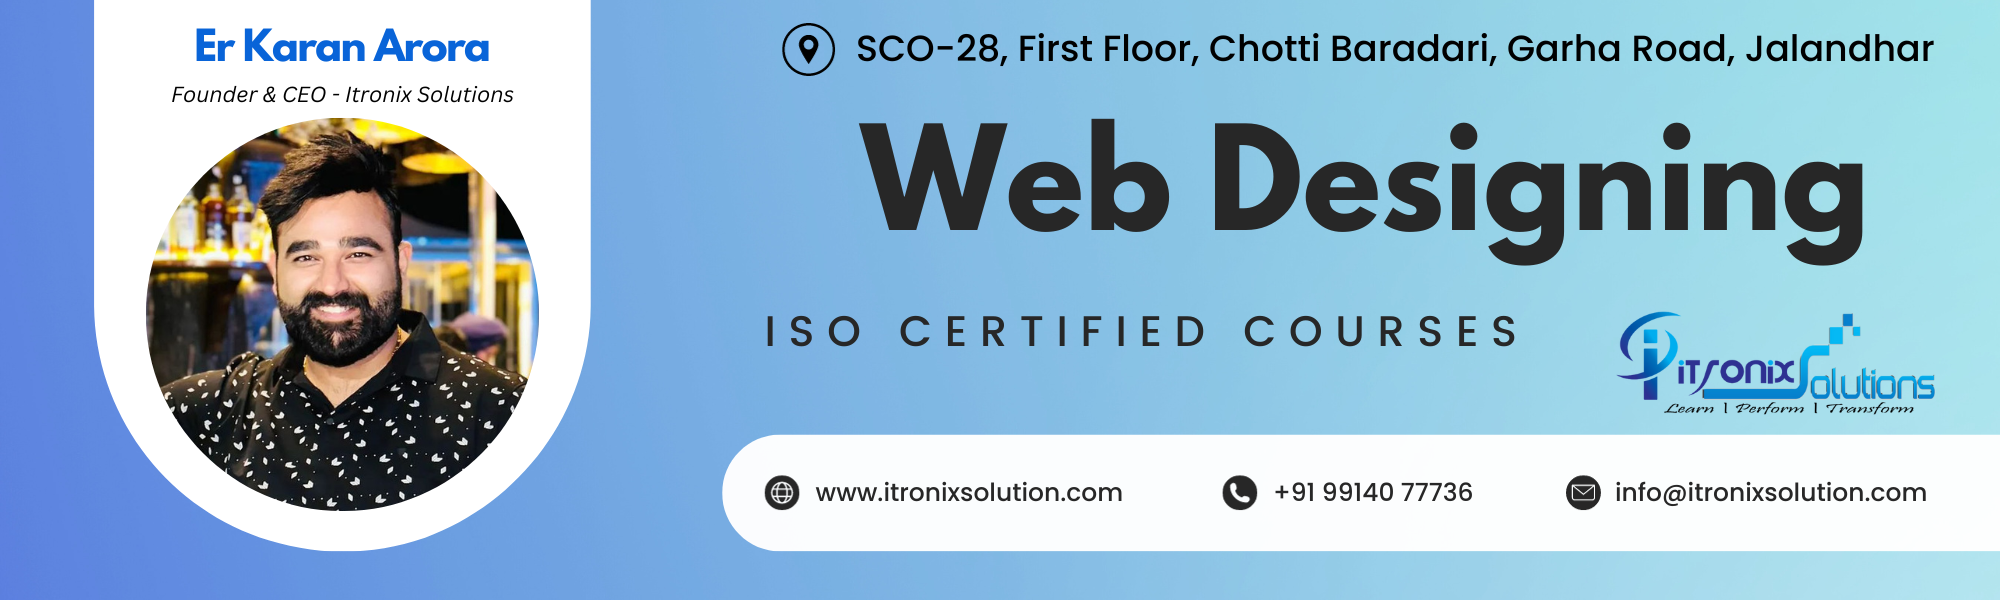 Web Designing Course in Jalandhar - ITRONIX SOLUTIONS